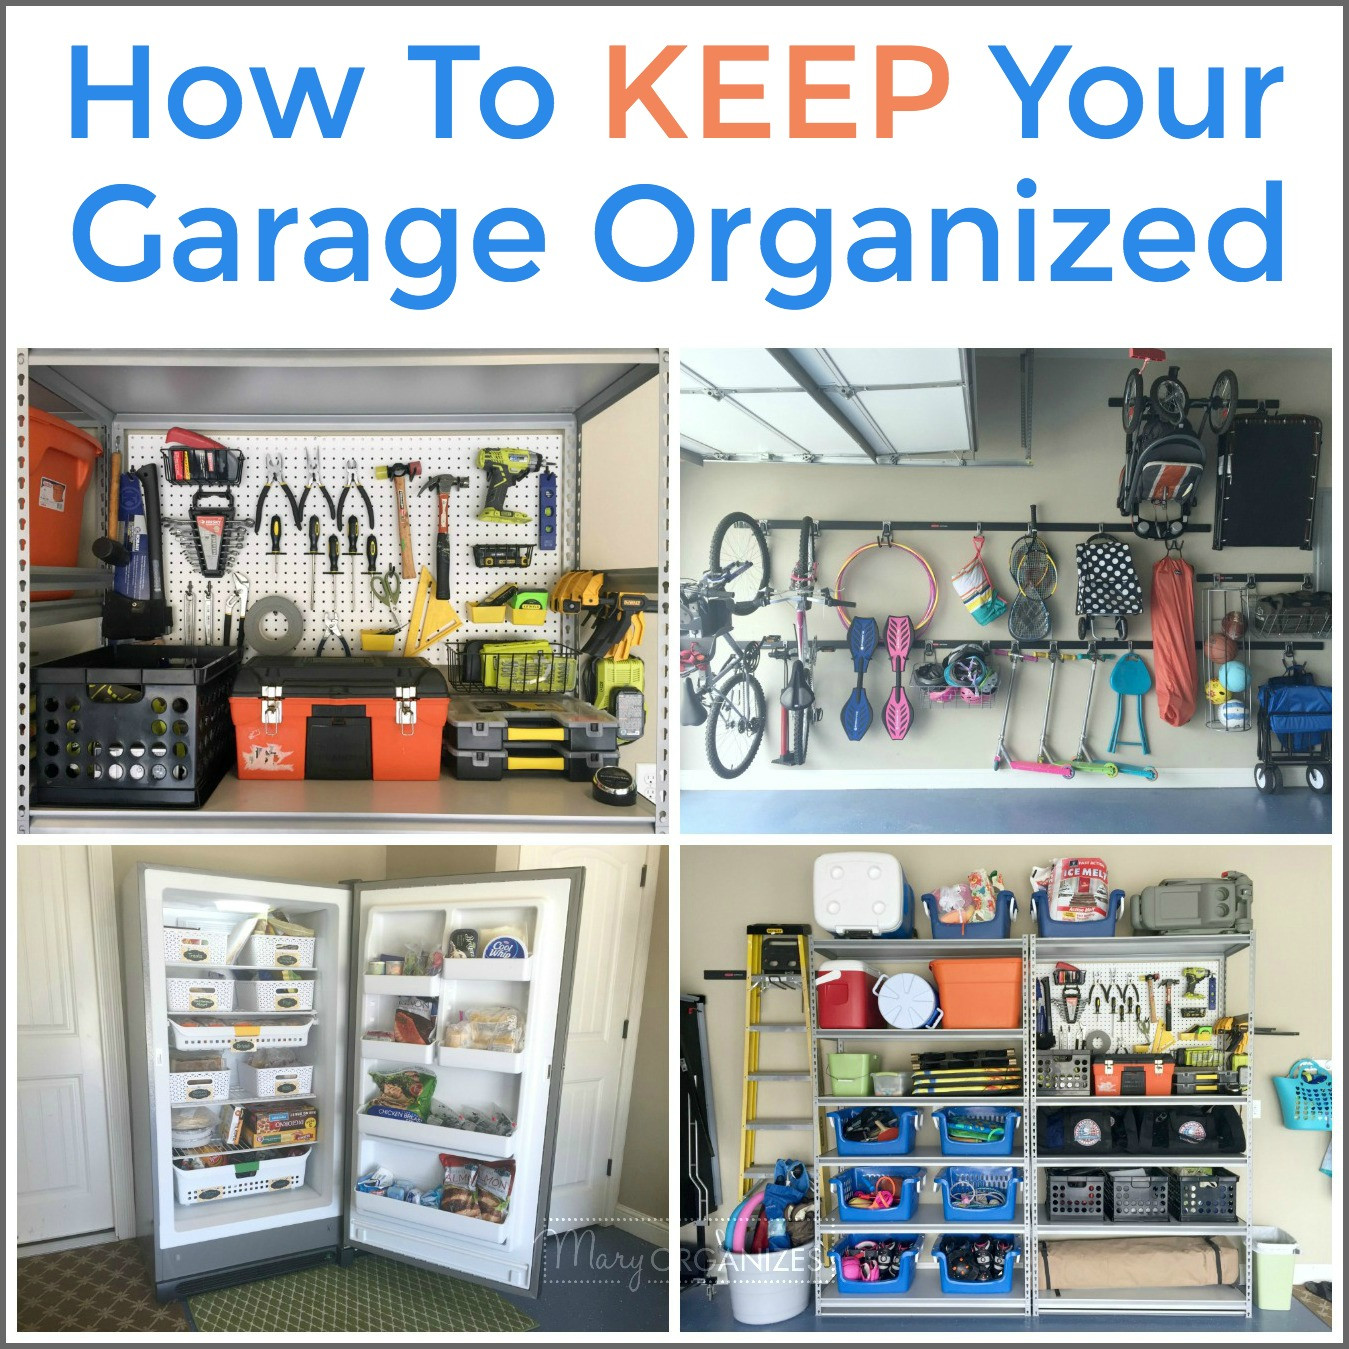 Organized Garage Images
 Organize Your Garage ONE WEEK All About The Garage